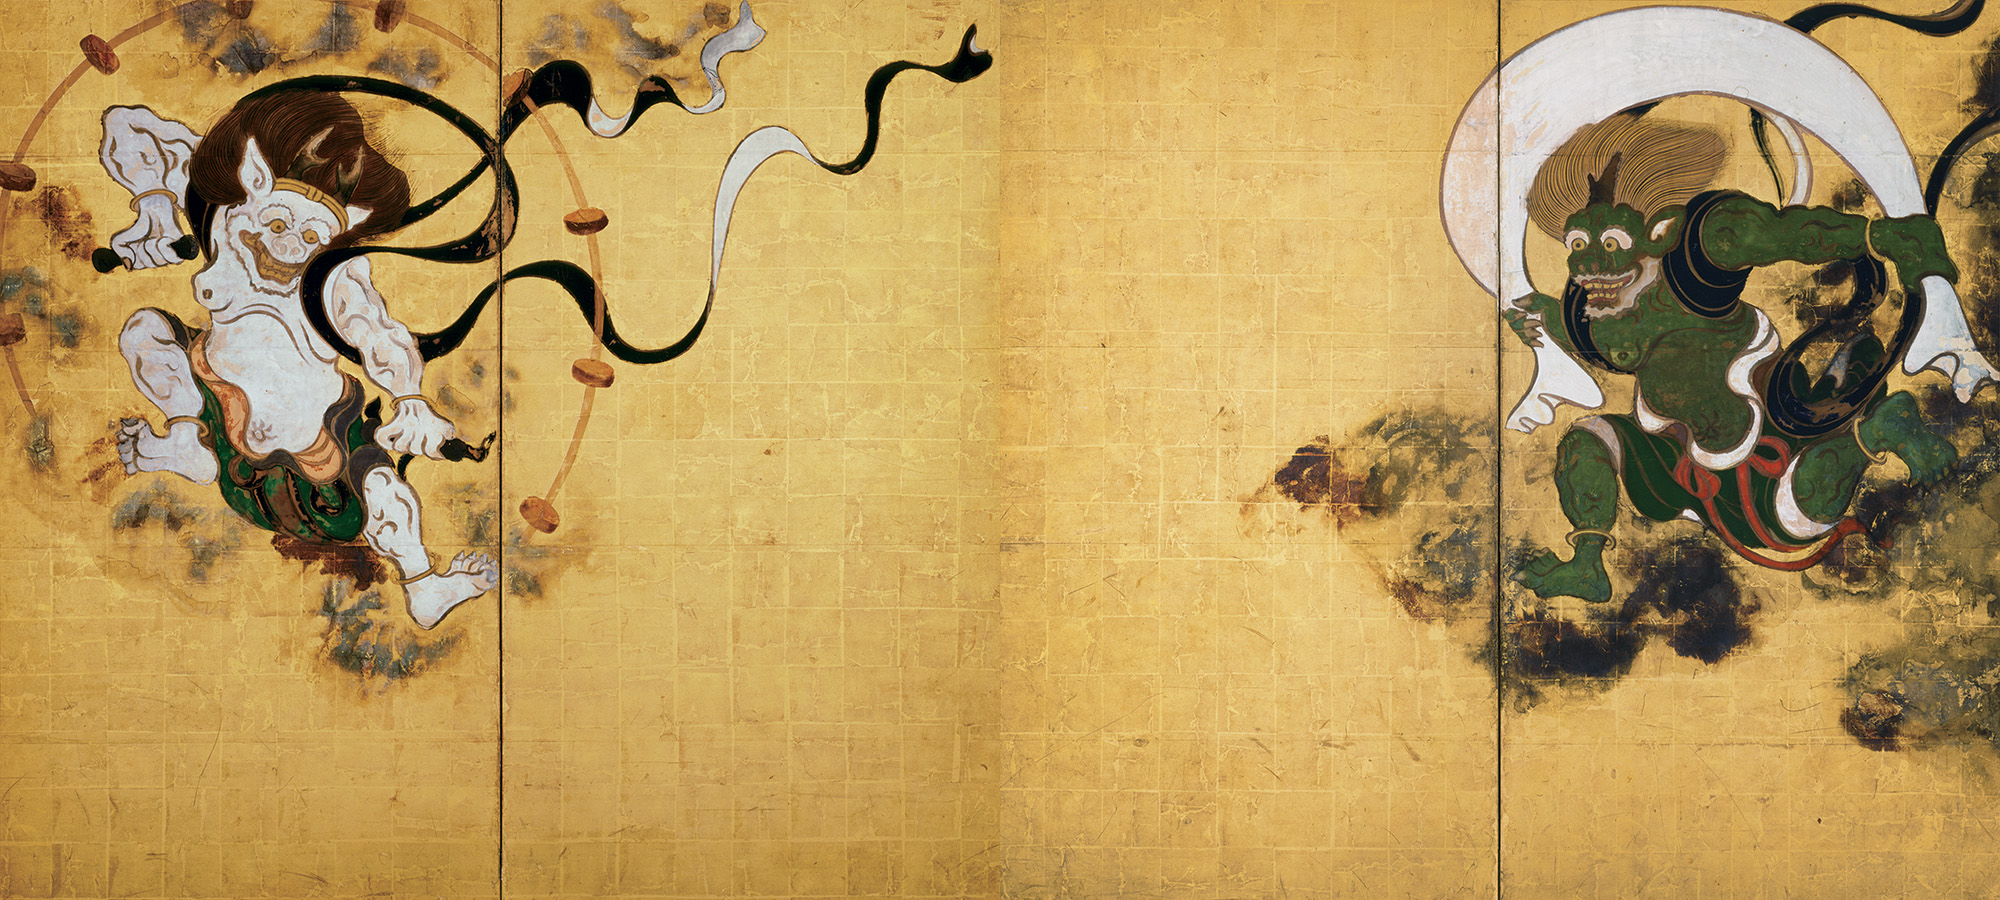 'Wind God and Thunder God' (17th century), a National Treasure by Tawaraya Sotatsu | NINNA-JI TEMPLE, KYOTO